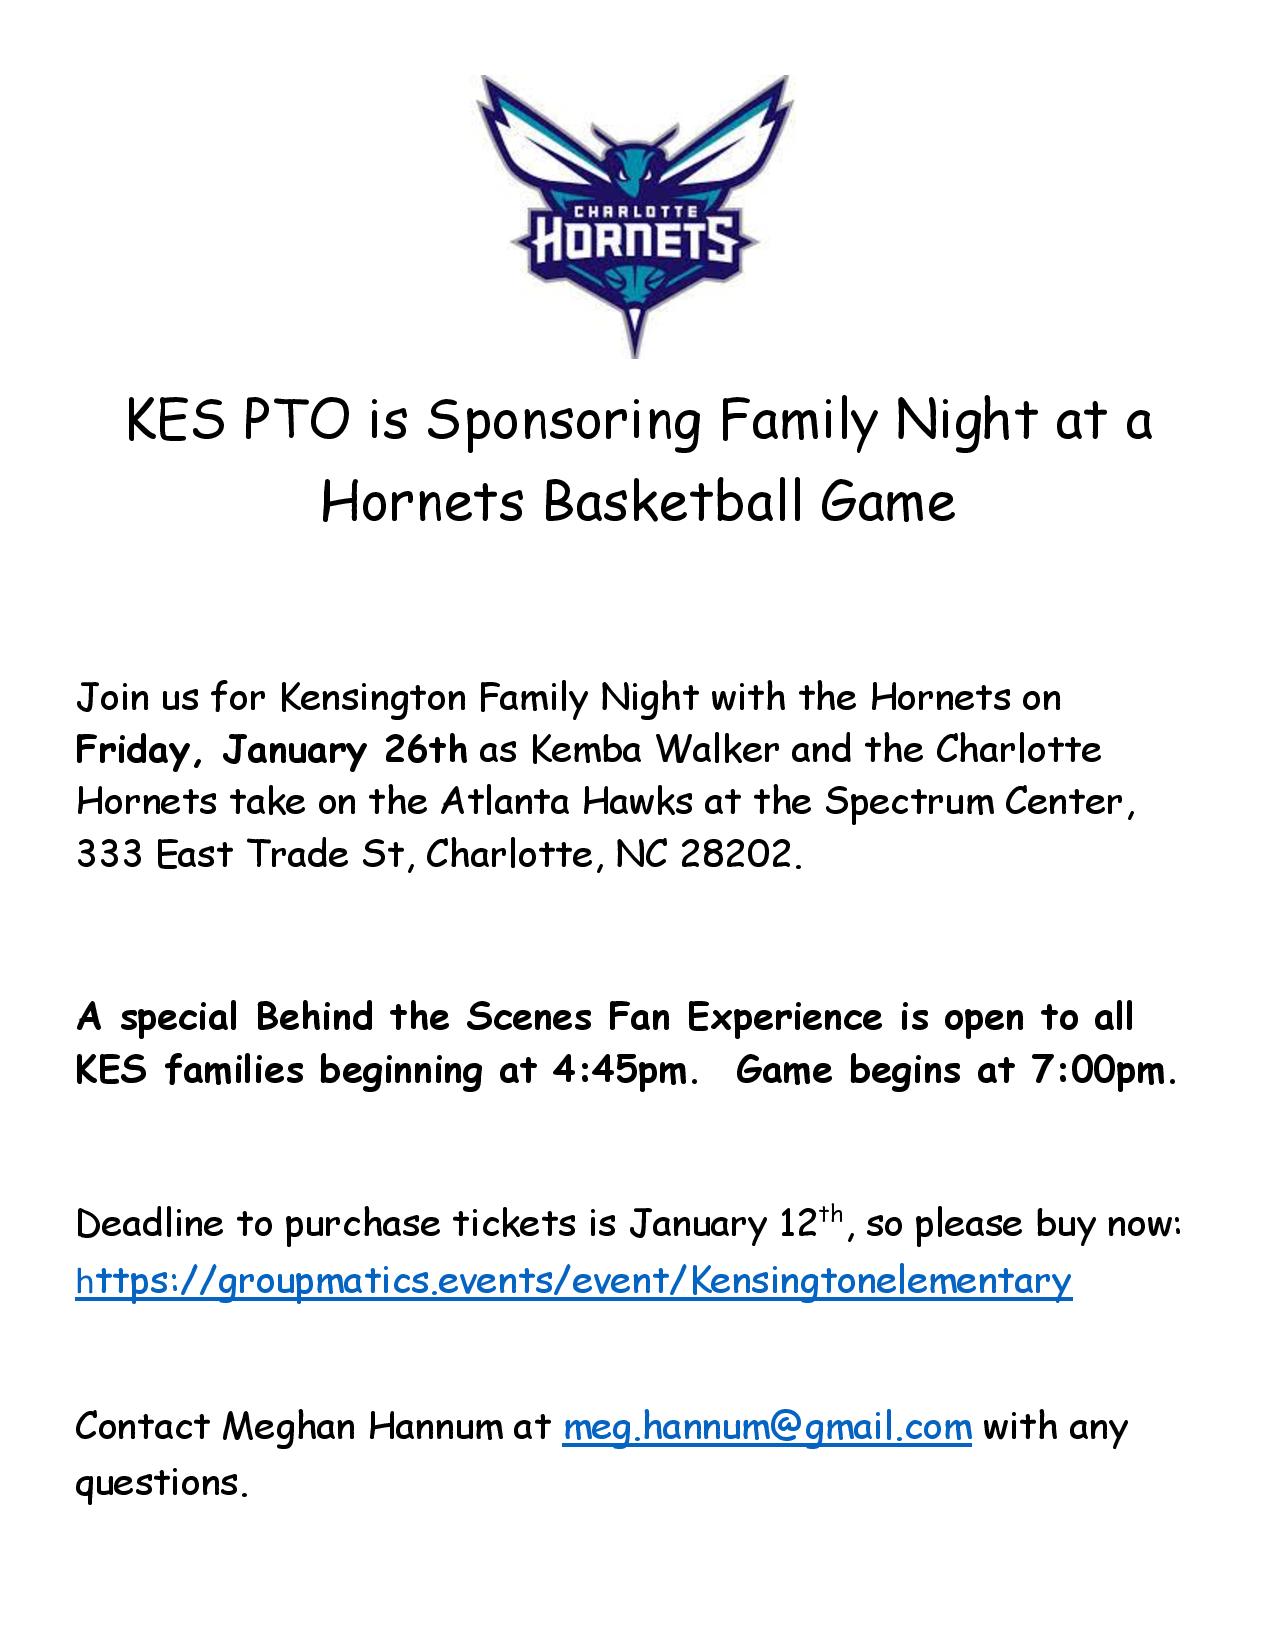 Kensington PTO - Family Night with the Checkers!